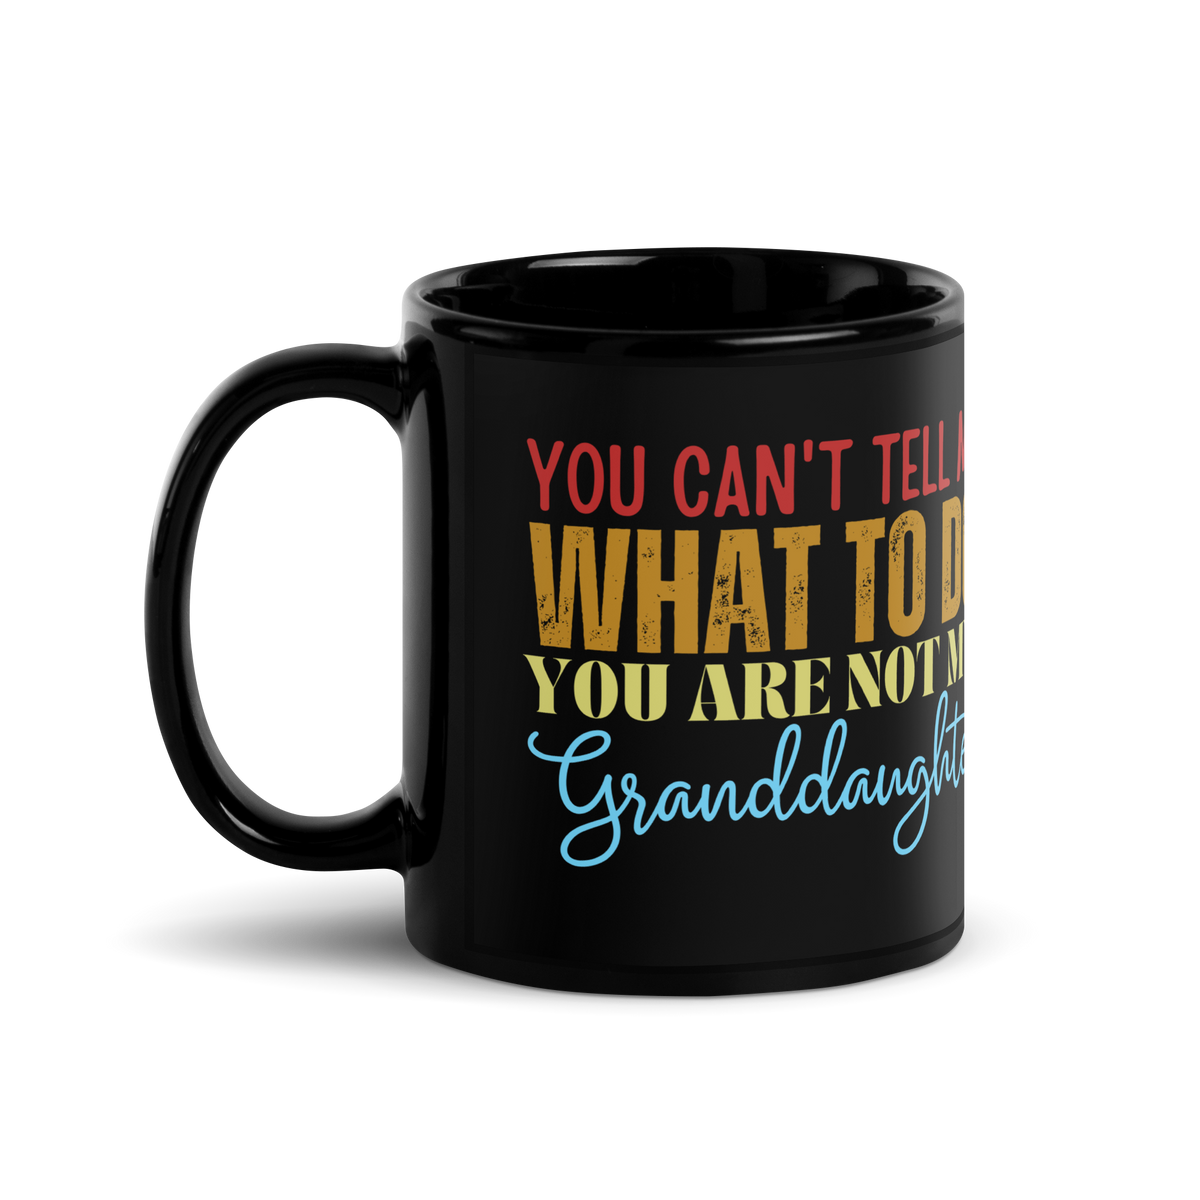 grandparents gift, granddad mug, gandmom mug, coffee mug, tea mug, funny grandparents gift, gift to grandparents, you can't tell me what to do you are not my granddaughter, funny grandma mug, funny granddad mug, new papa gift, gift for grandpa, gift for grandma, cup of tea, coffee cup, cup